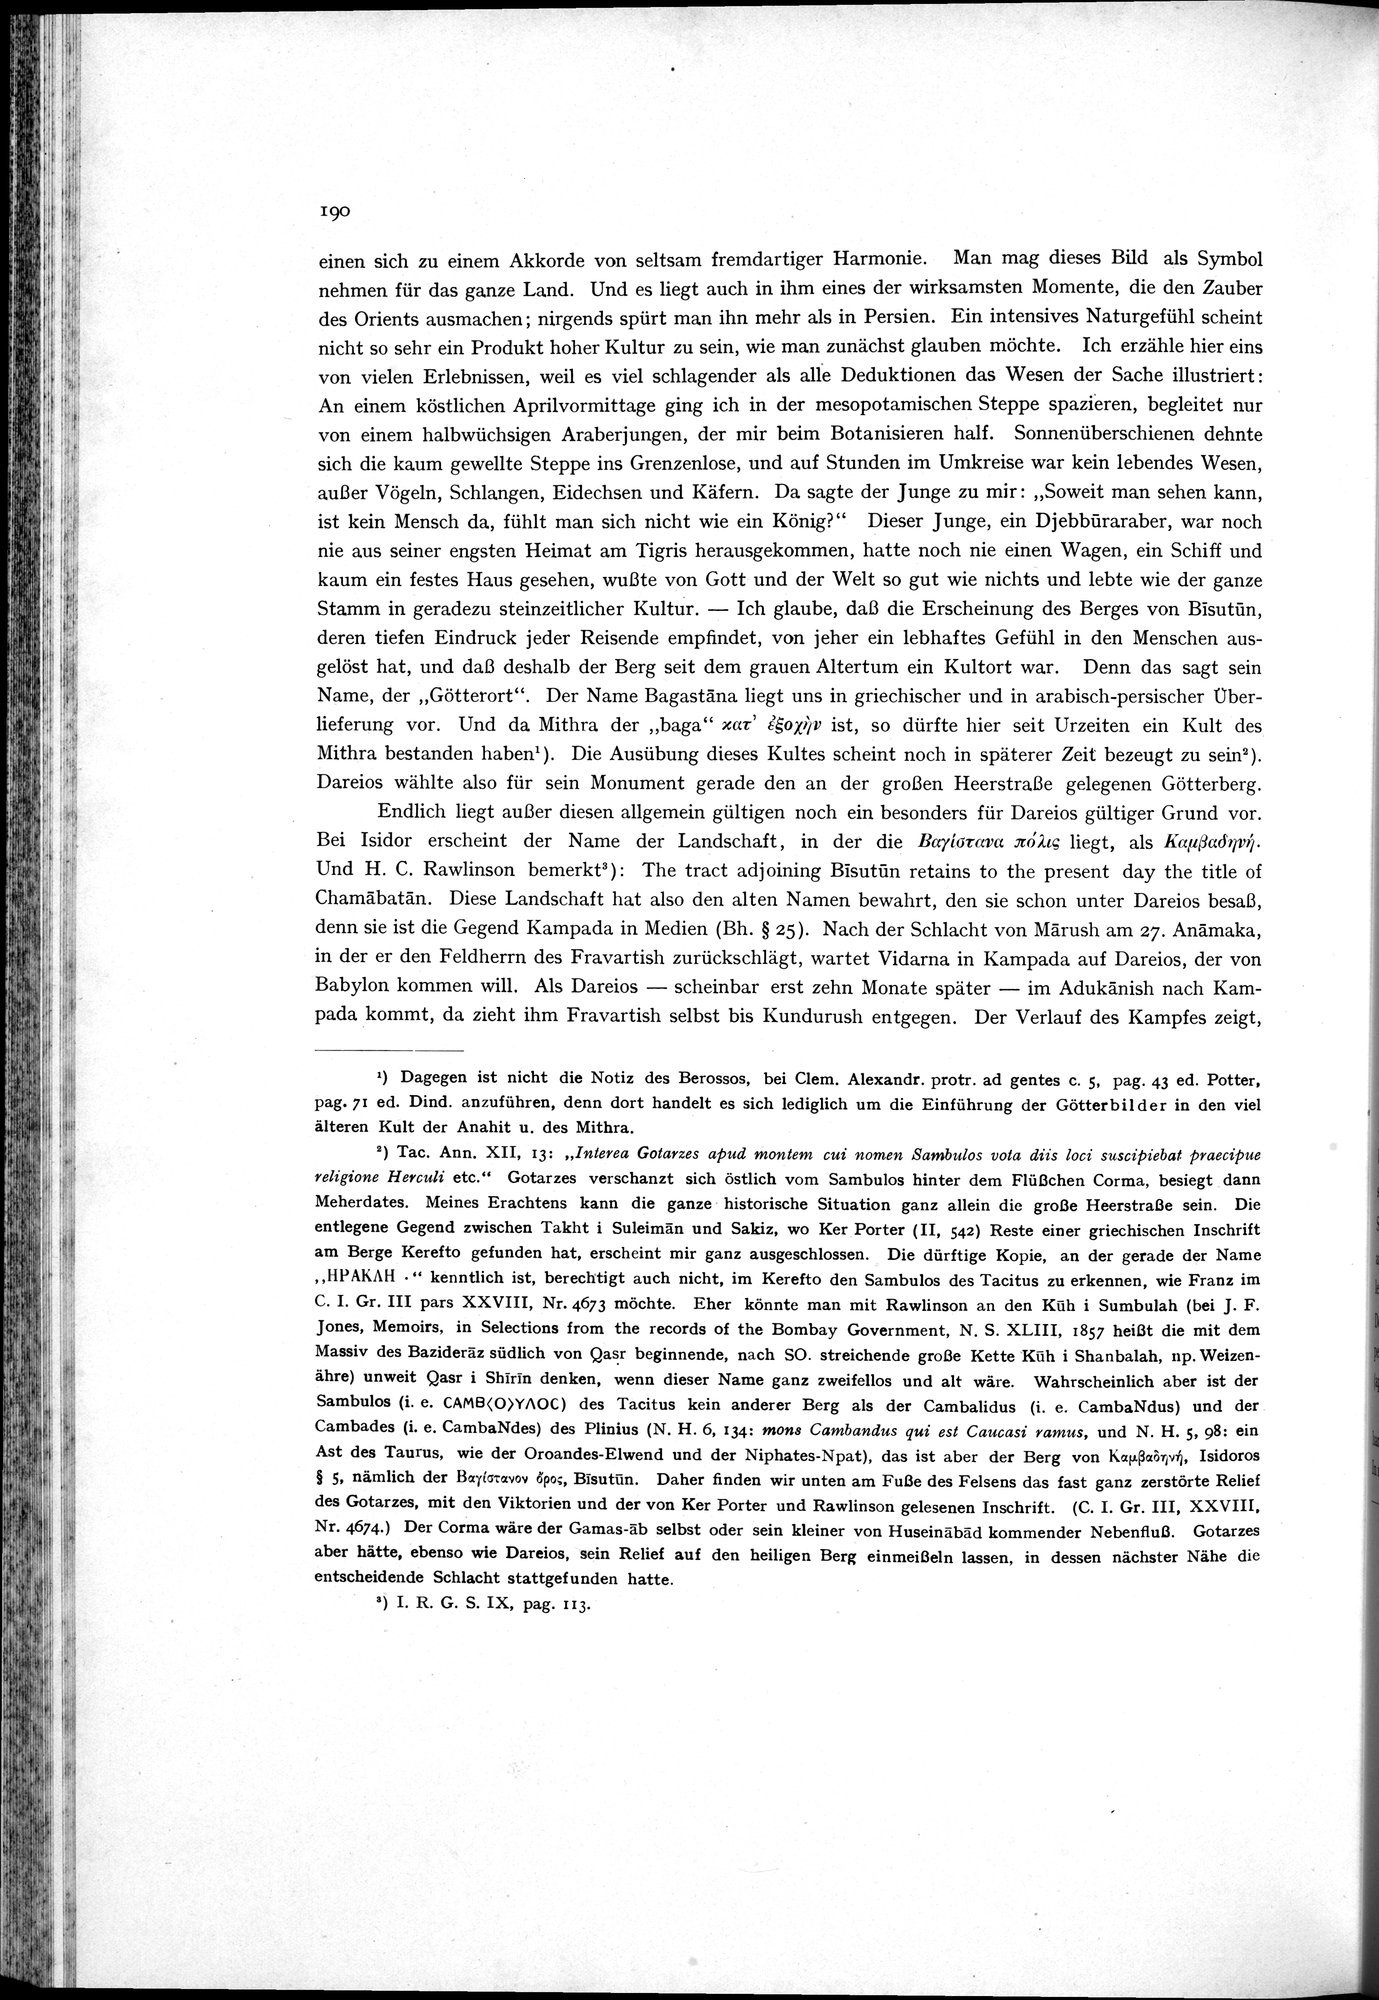 Iranische Felsreliefs : vol.1 / Page 202 (Grayscale High Resolution Image)